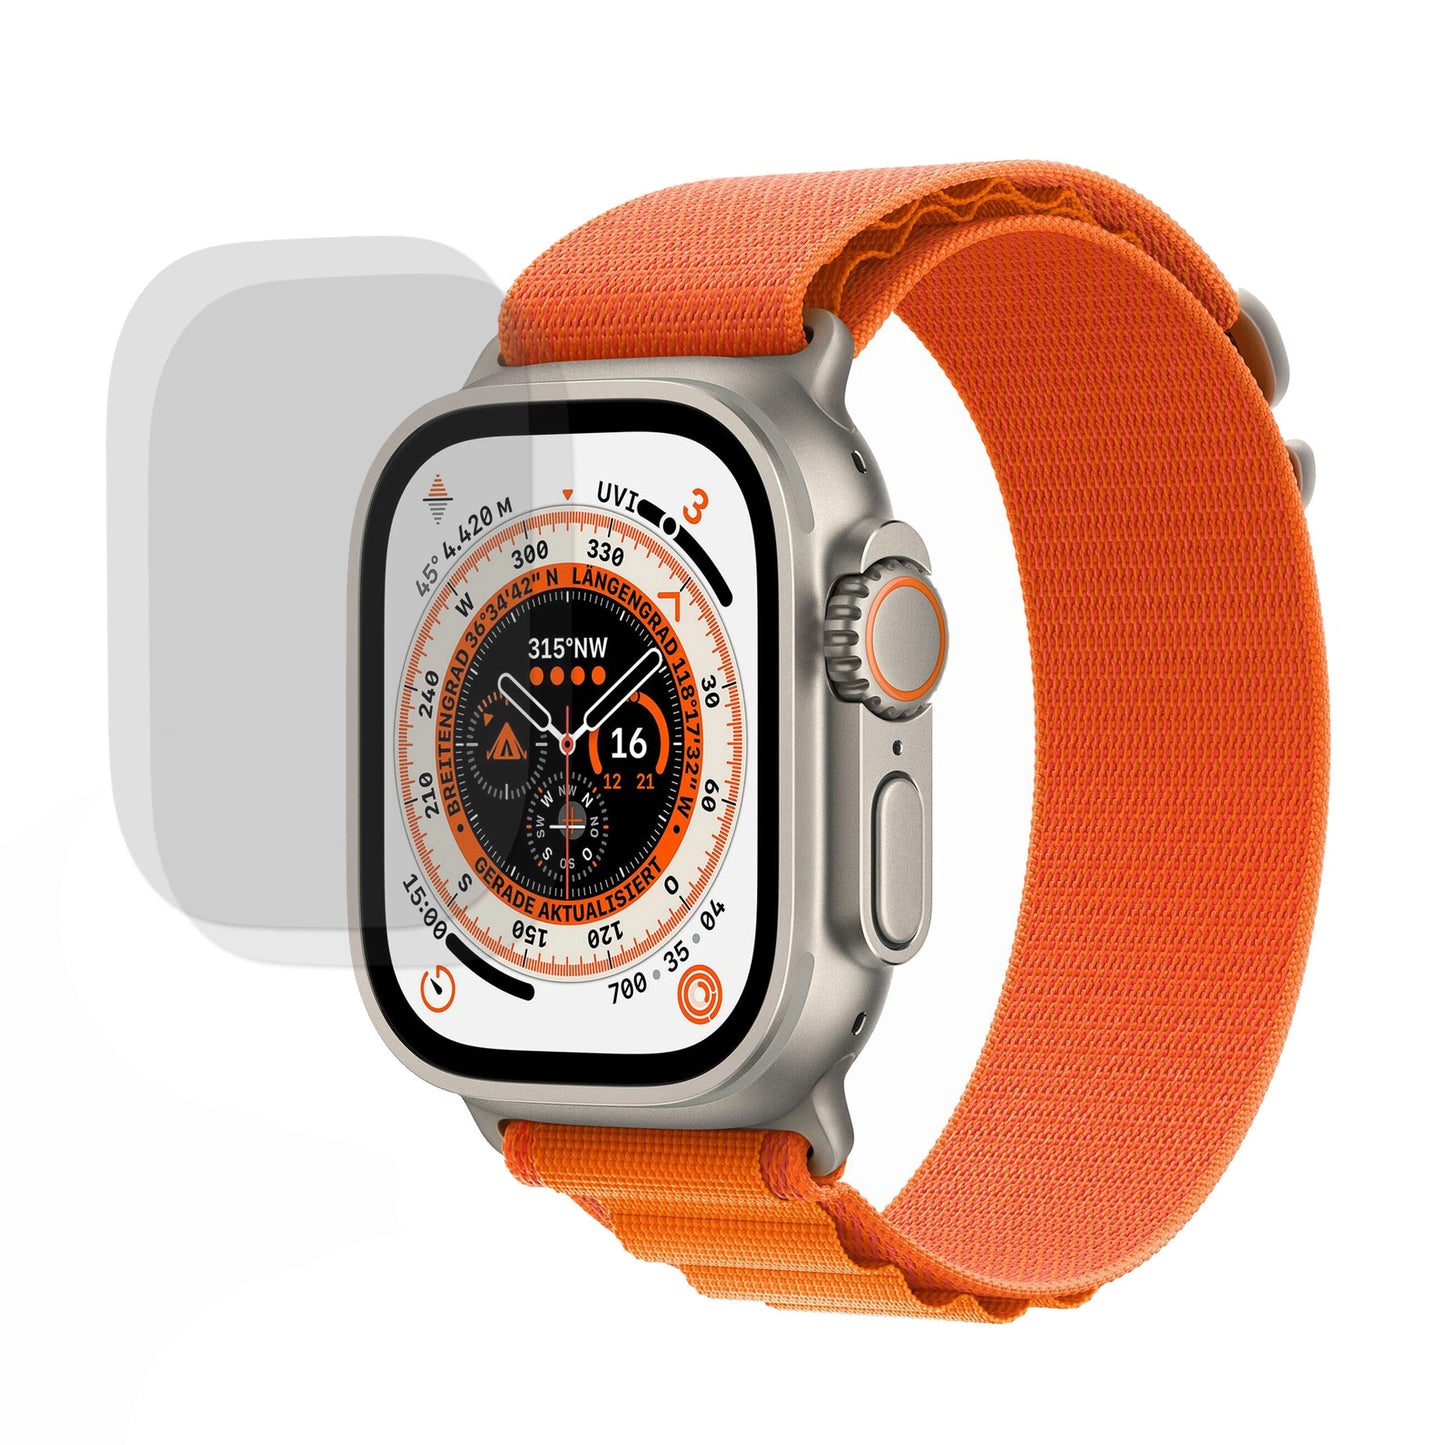 arktis Apple Watch Full Protection Schutzfolie - 2er Set